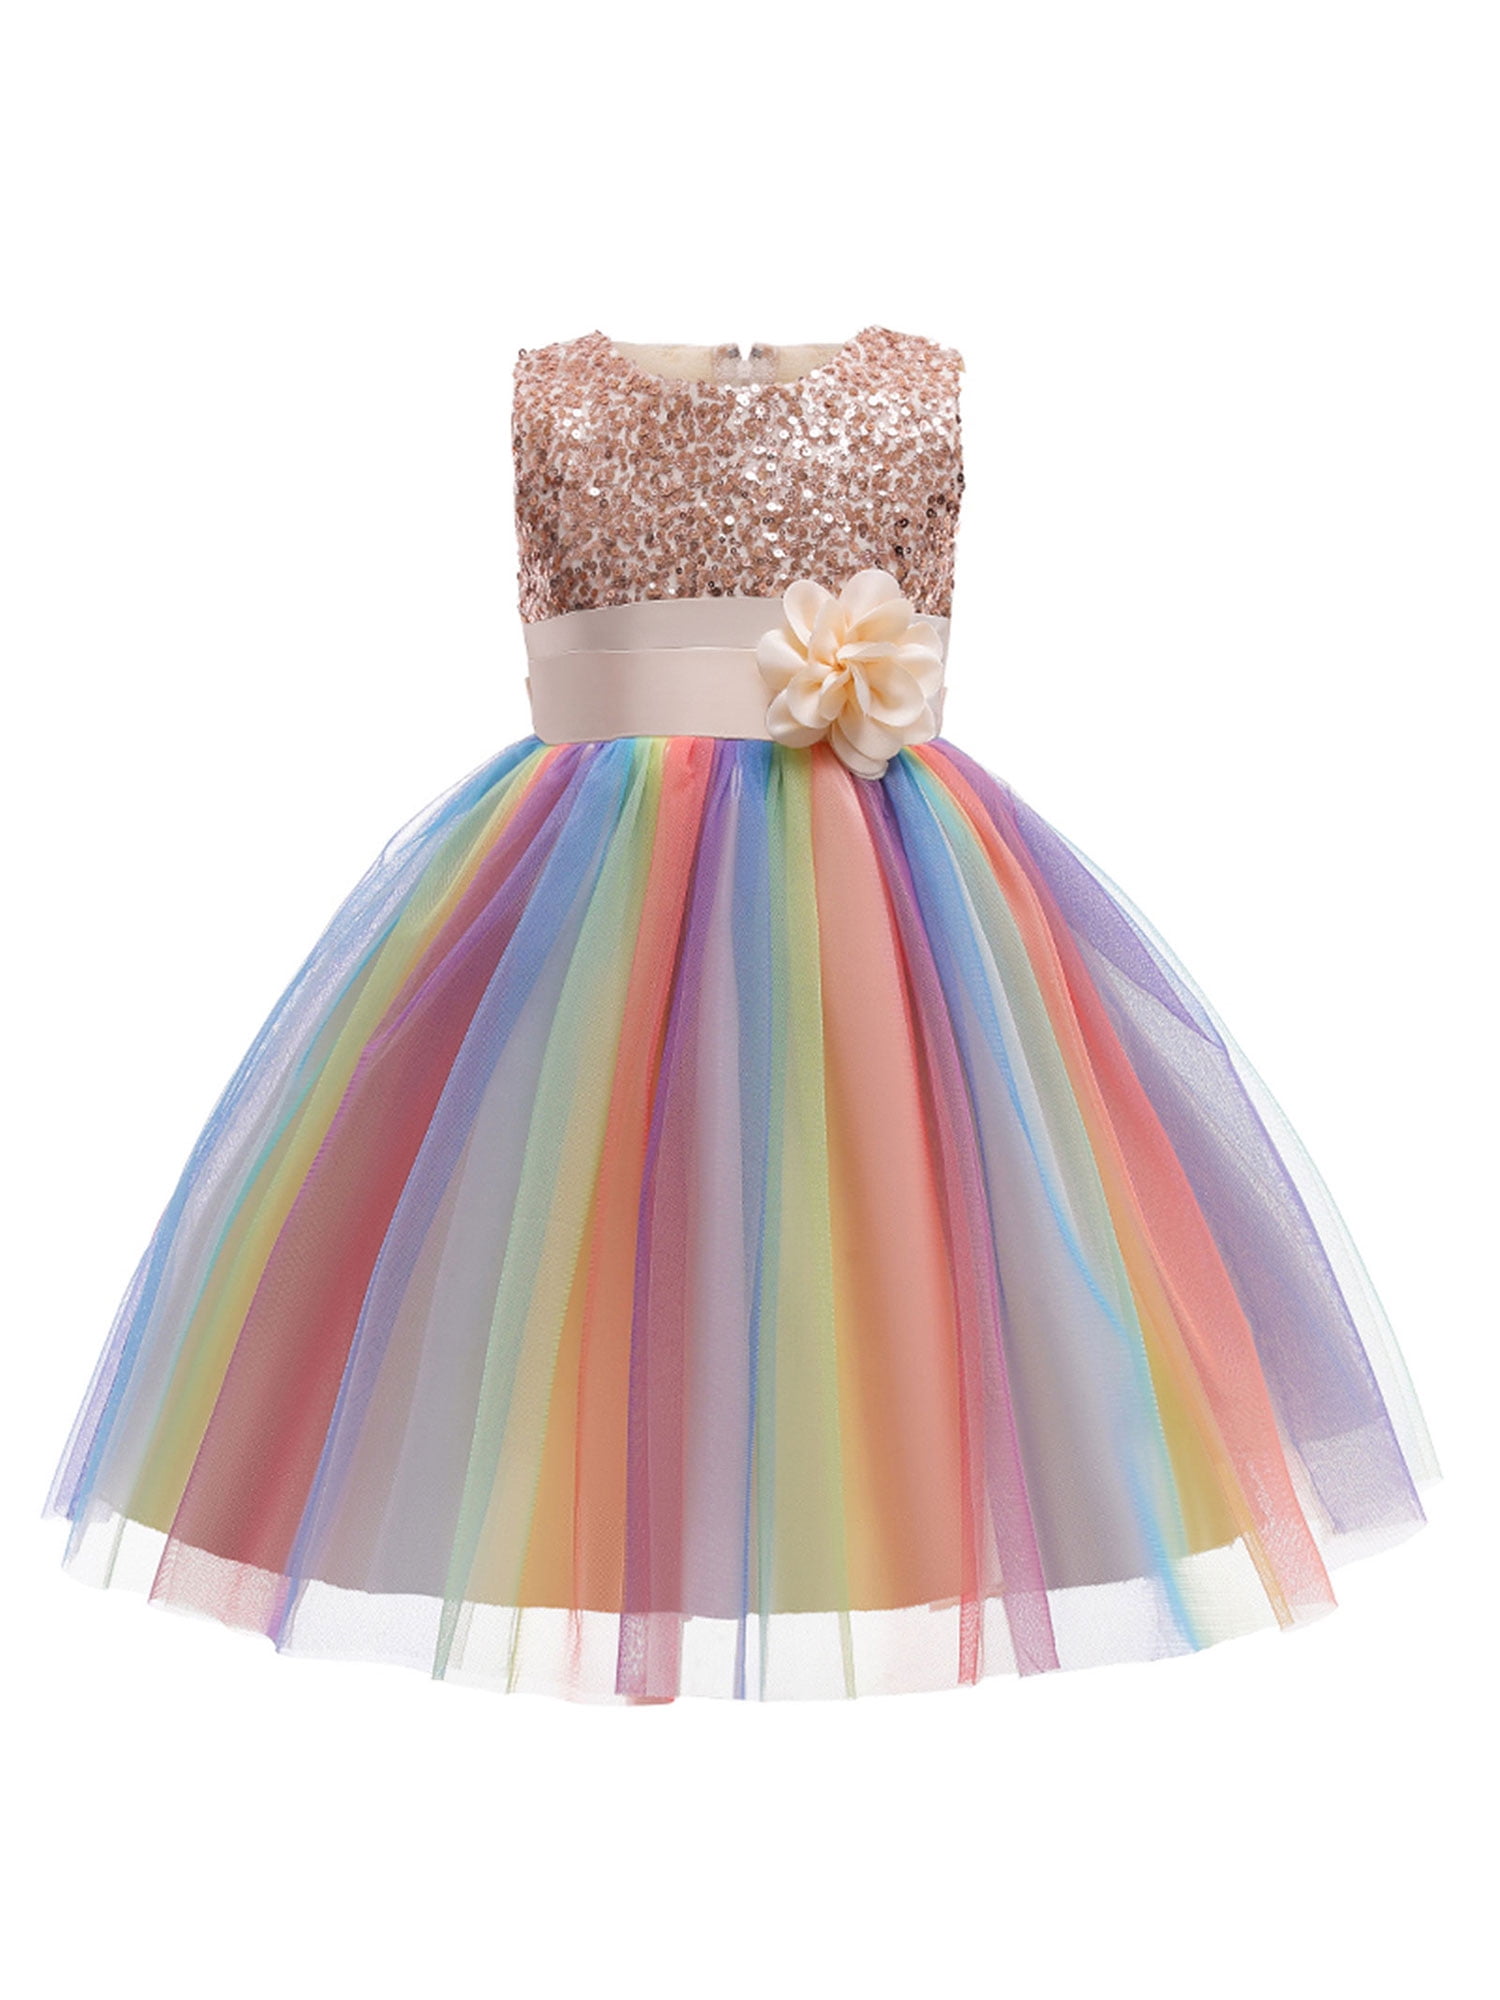 N/ D Toddler Baby Girl Flower Sequin Round Neck Sleeveless Dresses Rainbow Mesh Princess Dress Tutu Evening Dress 